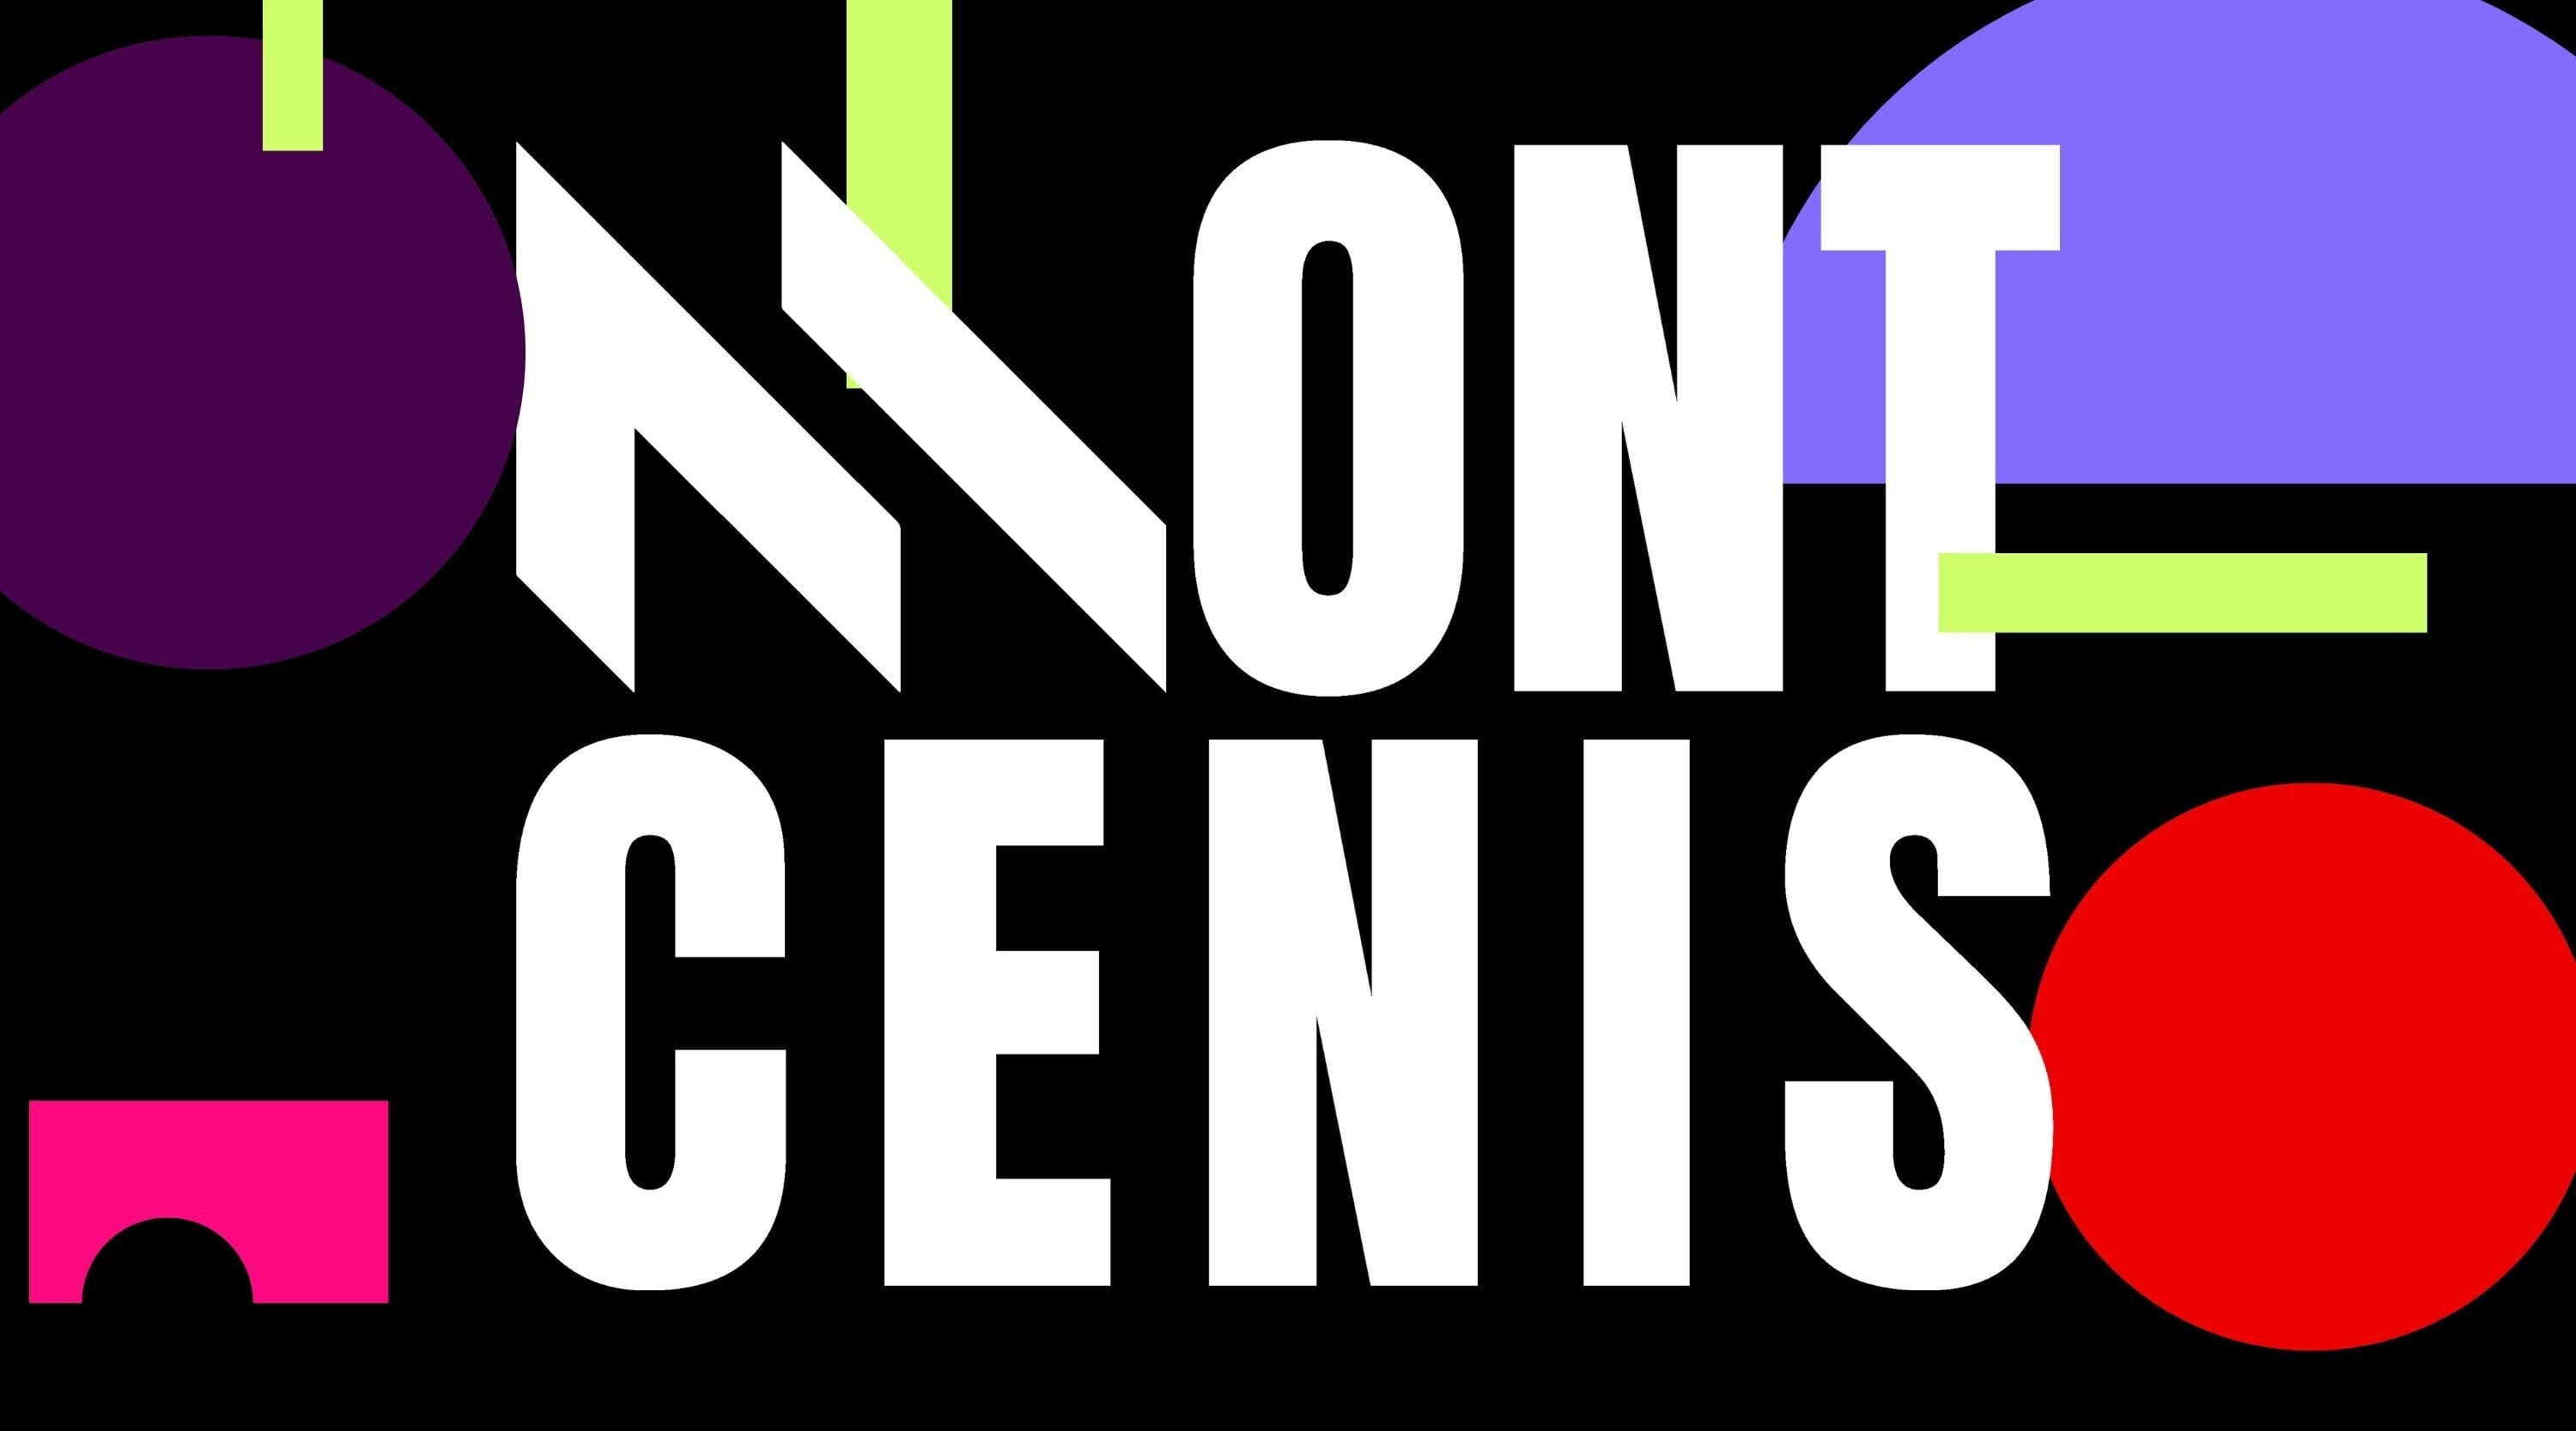 New Label: MONT CENIS